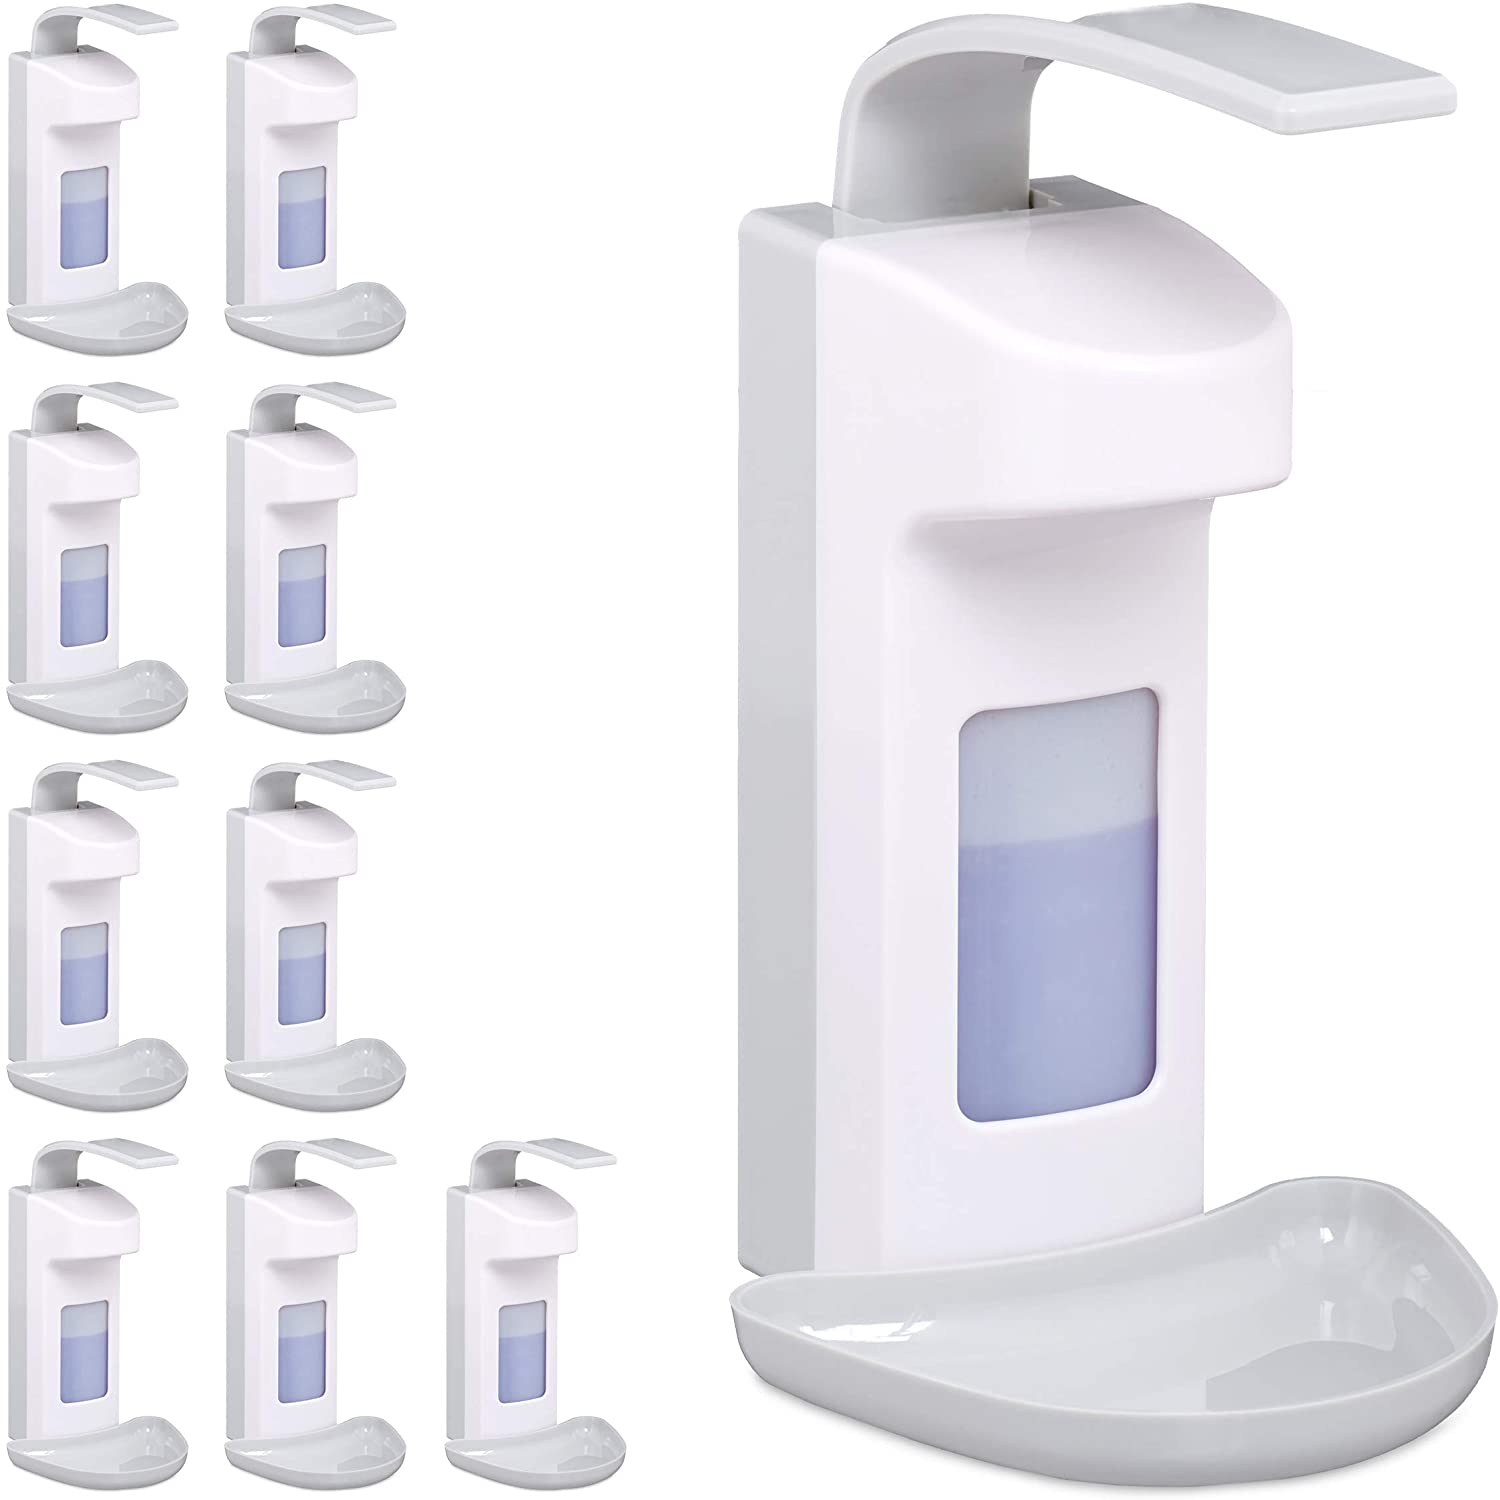 Relaxdays 10 x Disinfectant Dispenser with Drip Tray Hygiene Wall Dispenser Hand Disinfectant Arm Lever Dispenser for 500 ml White